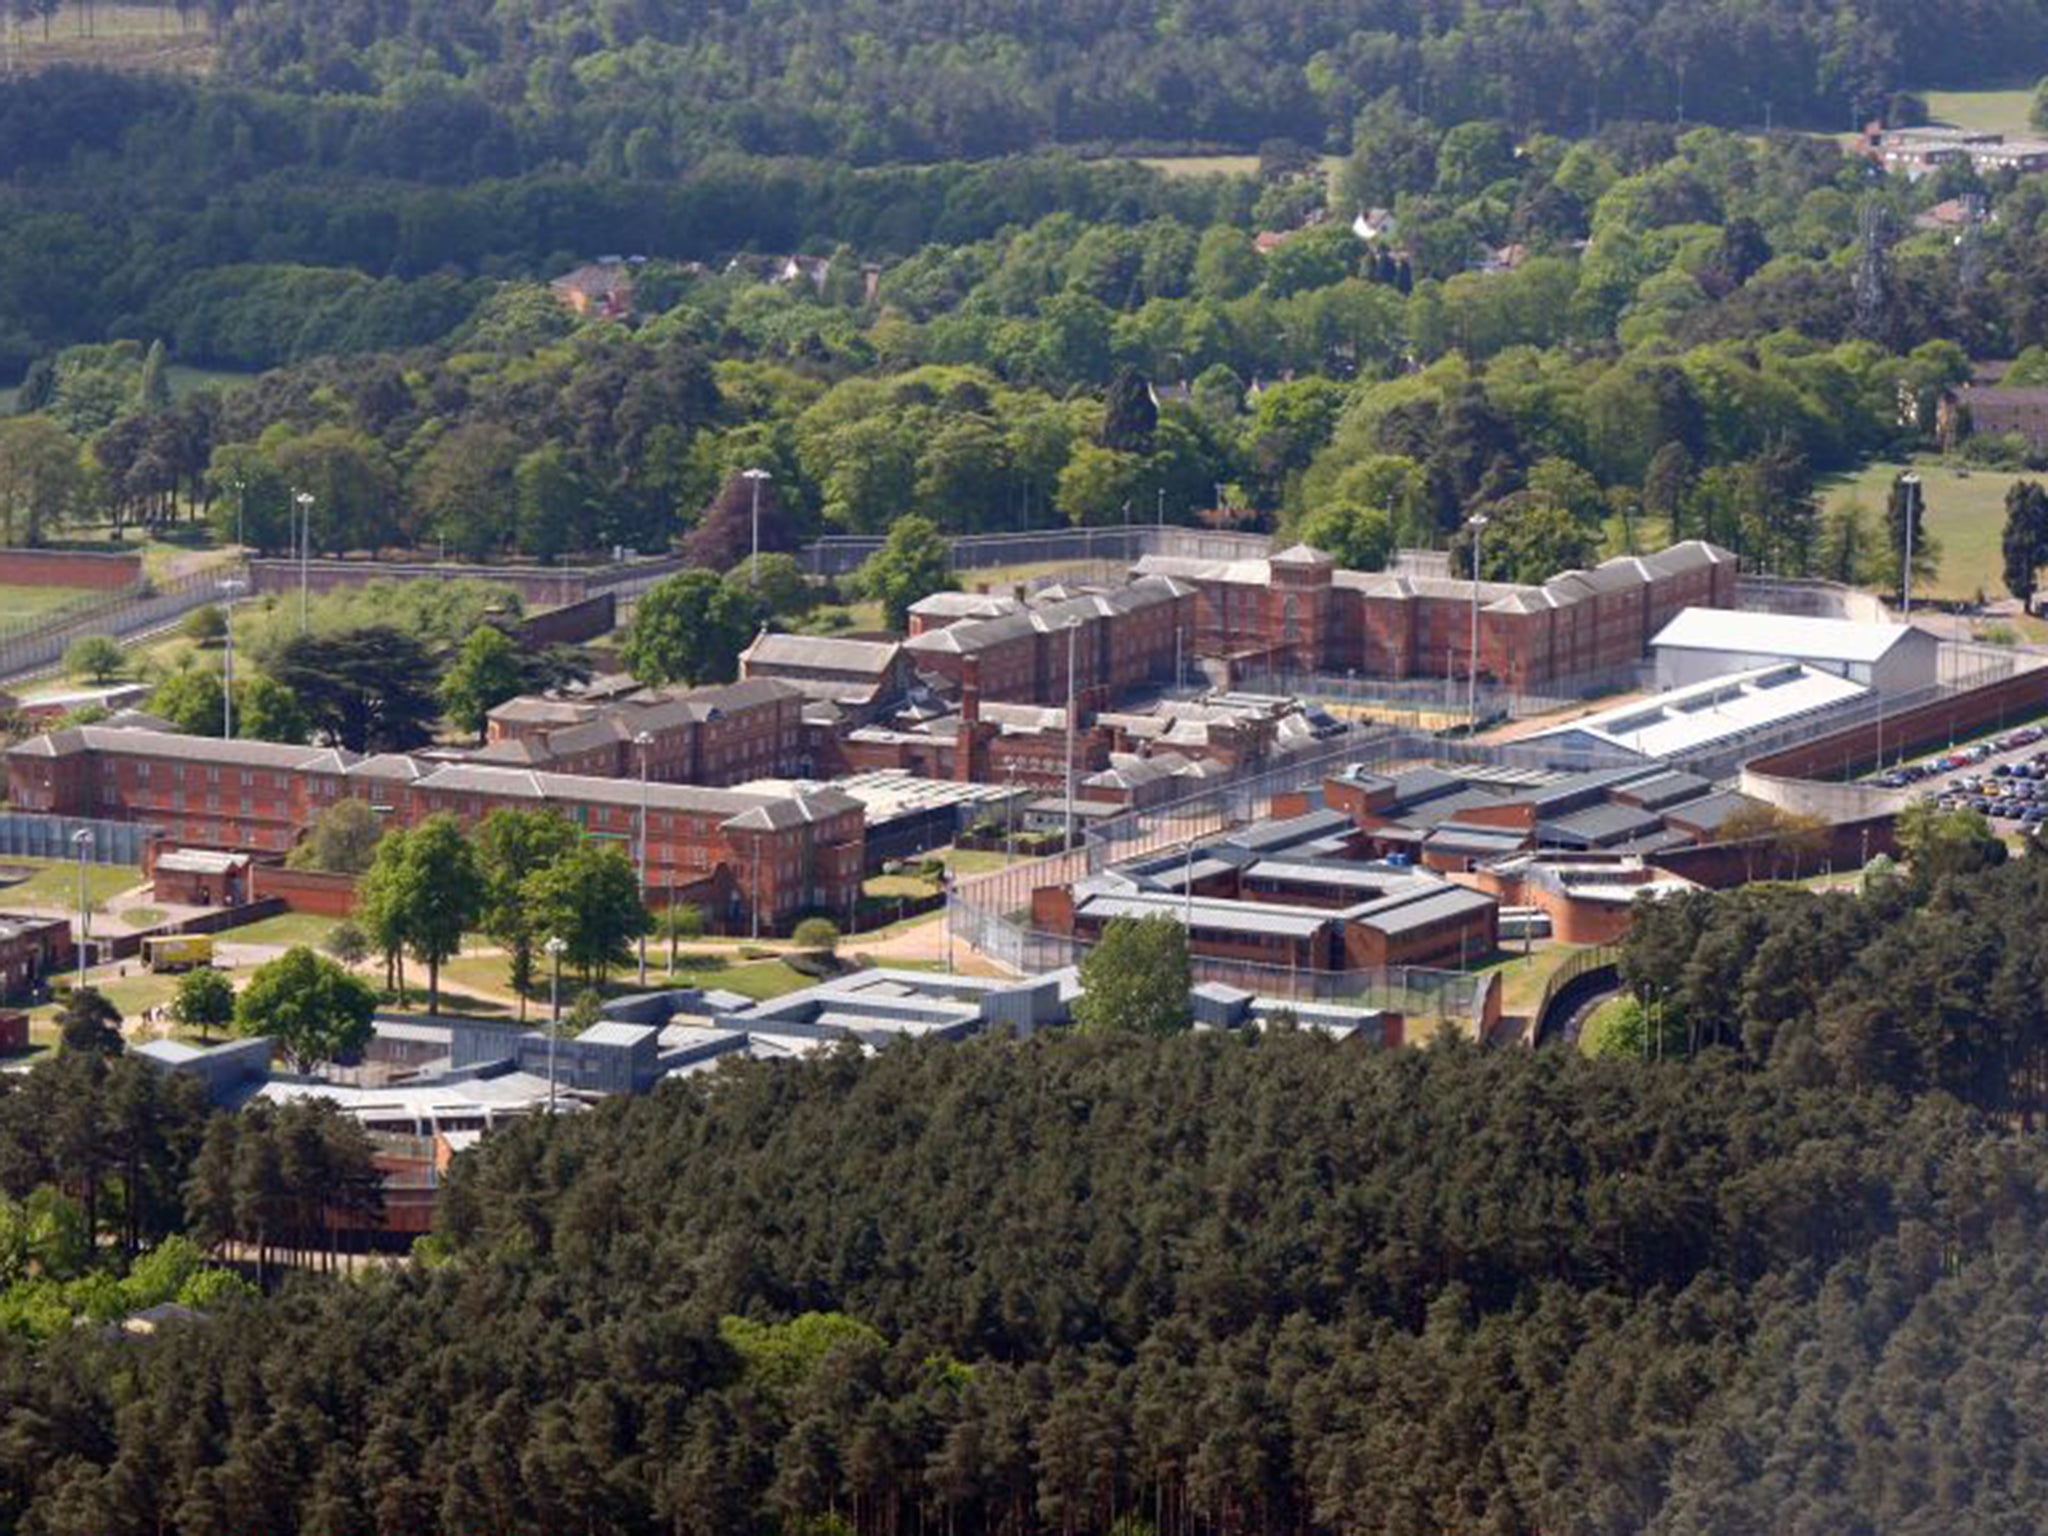 Broadmoor high-security hospital in Berkshire